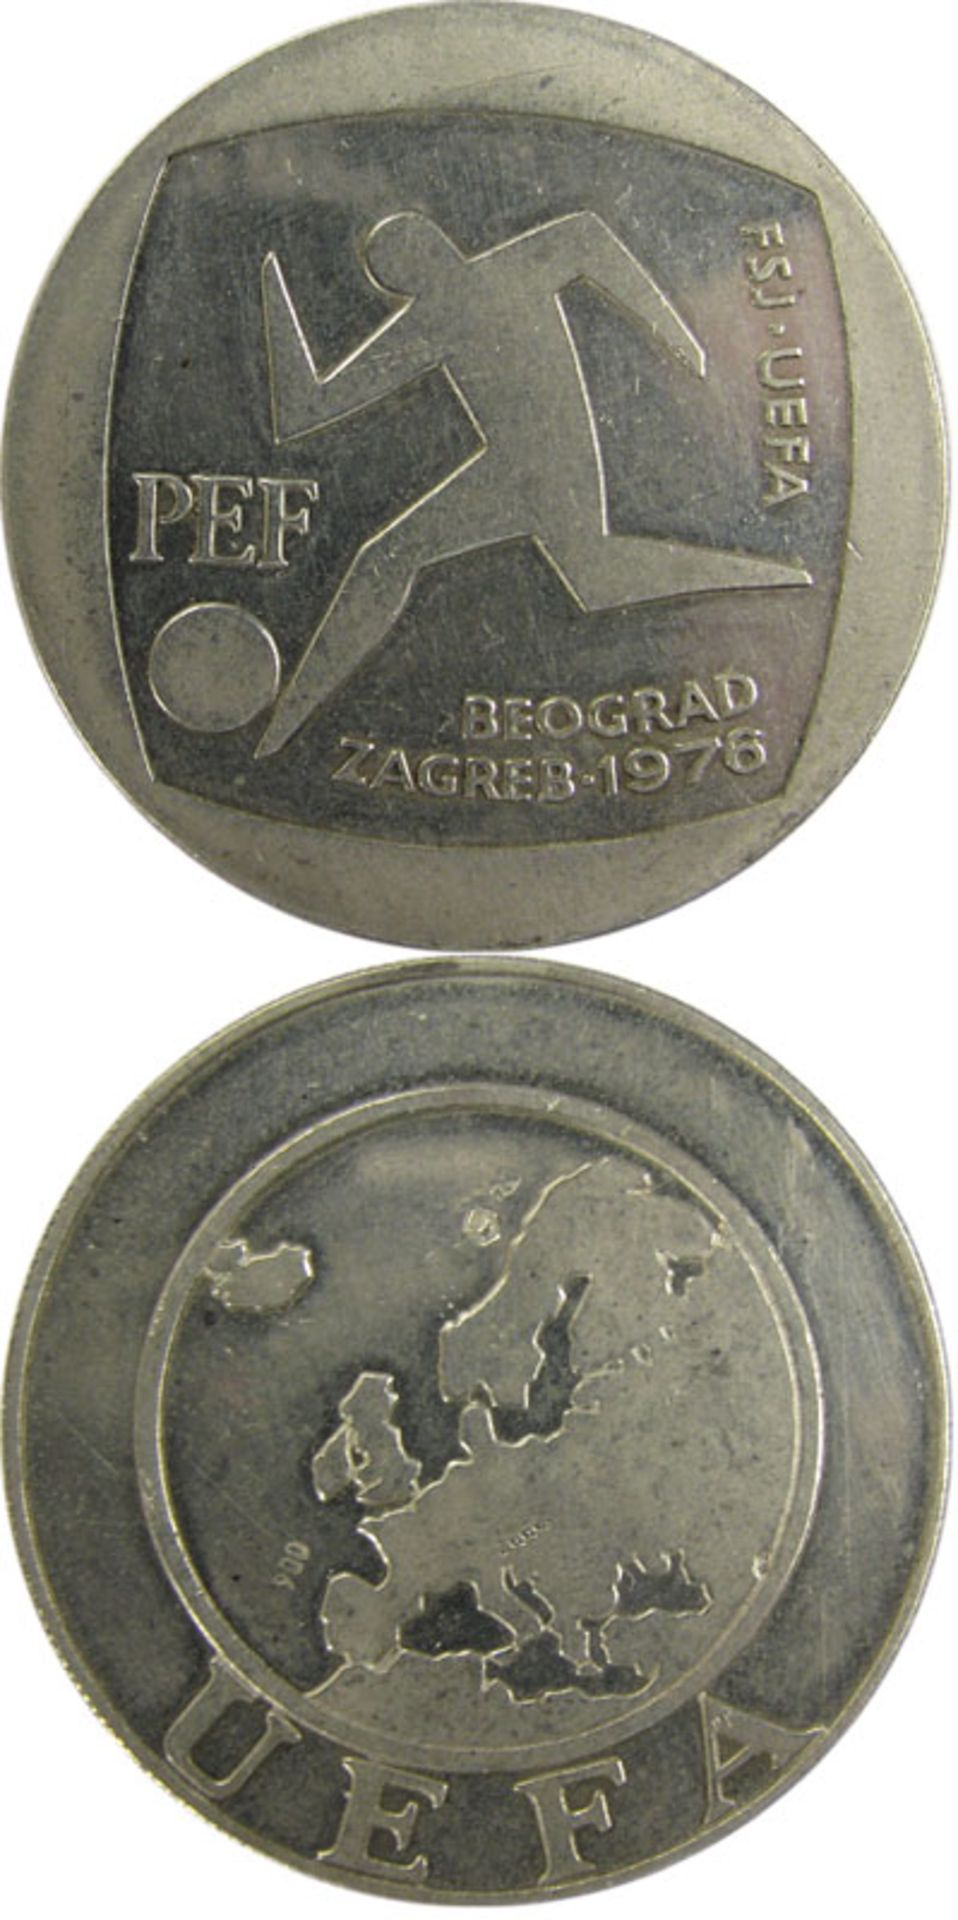 UEFA Euro 1976 Participation medal - Official participation medal for the UEFA Euro in Yugoslavia 19